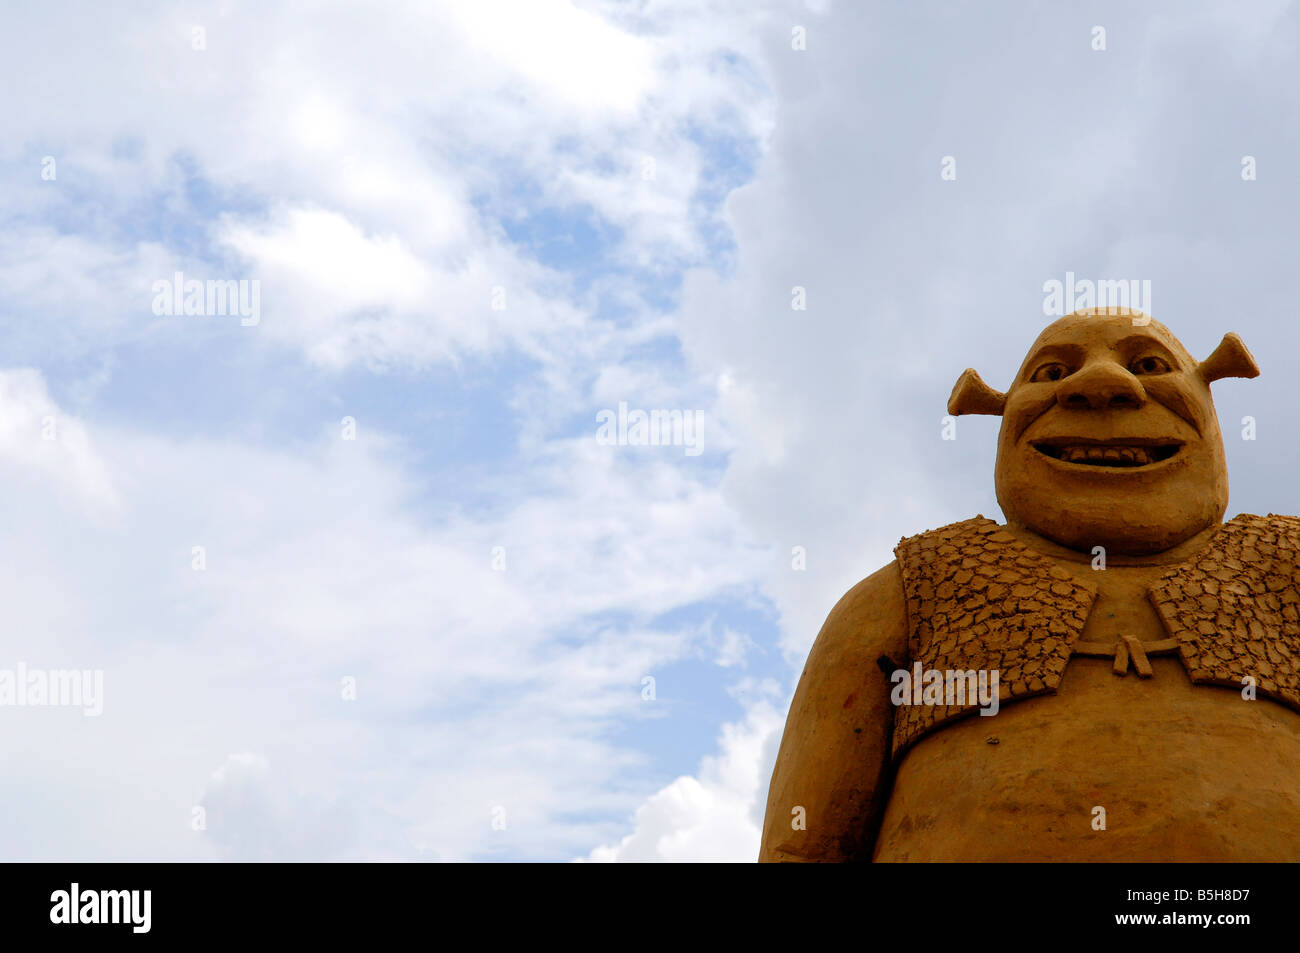 shrek america cartoon character hollywood film movies icon fiesa sand  sculpture art design festival portugal algarve Stock Photo - Alamy